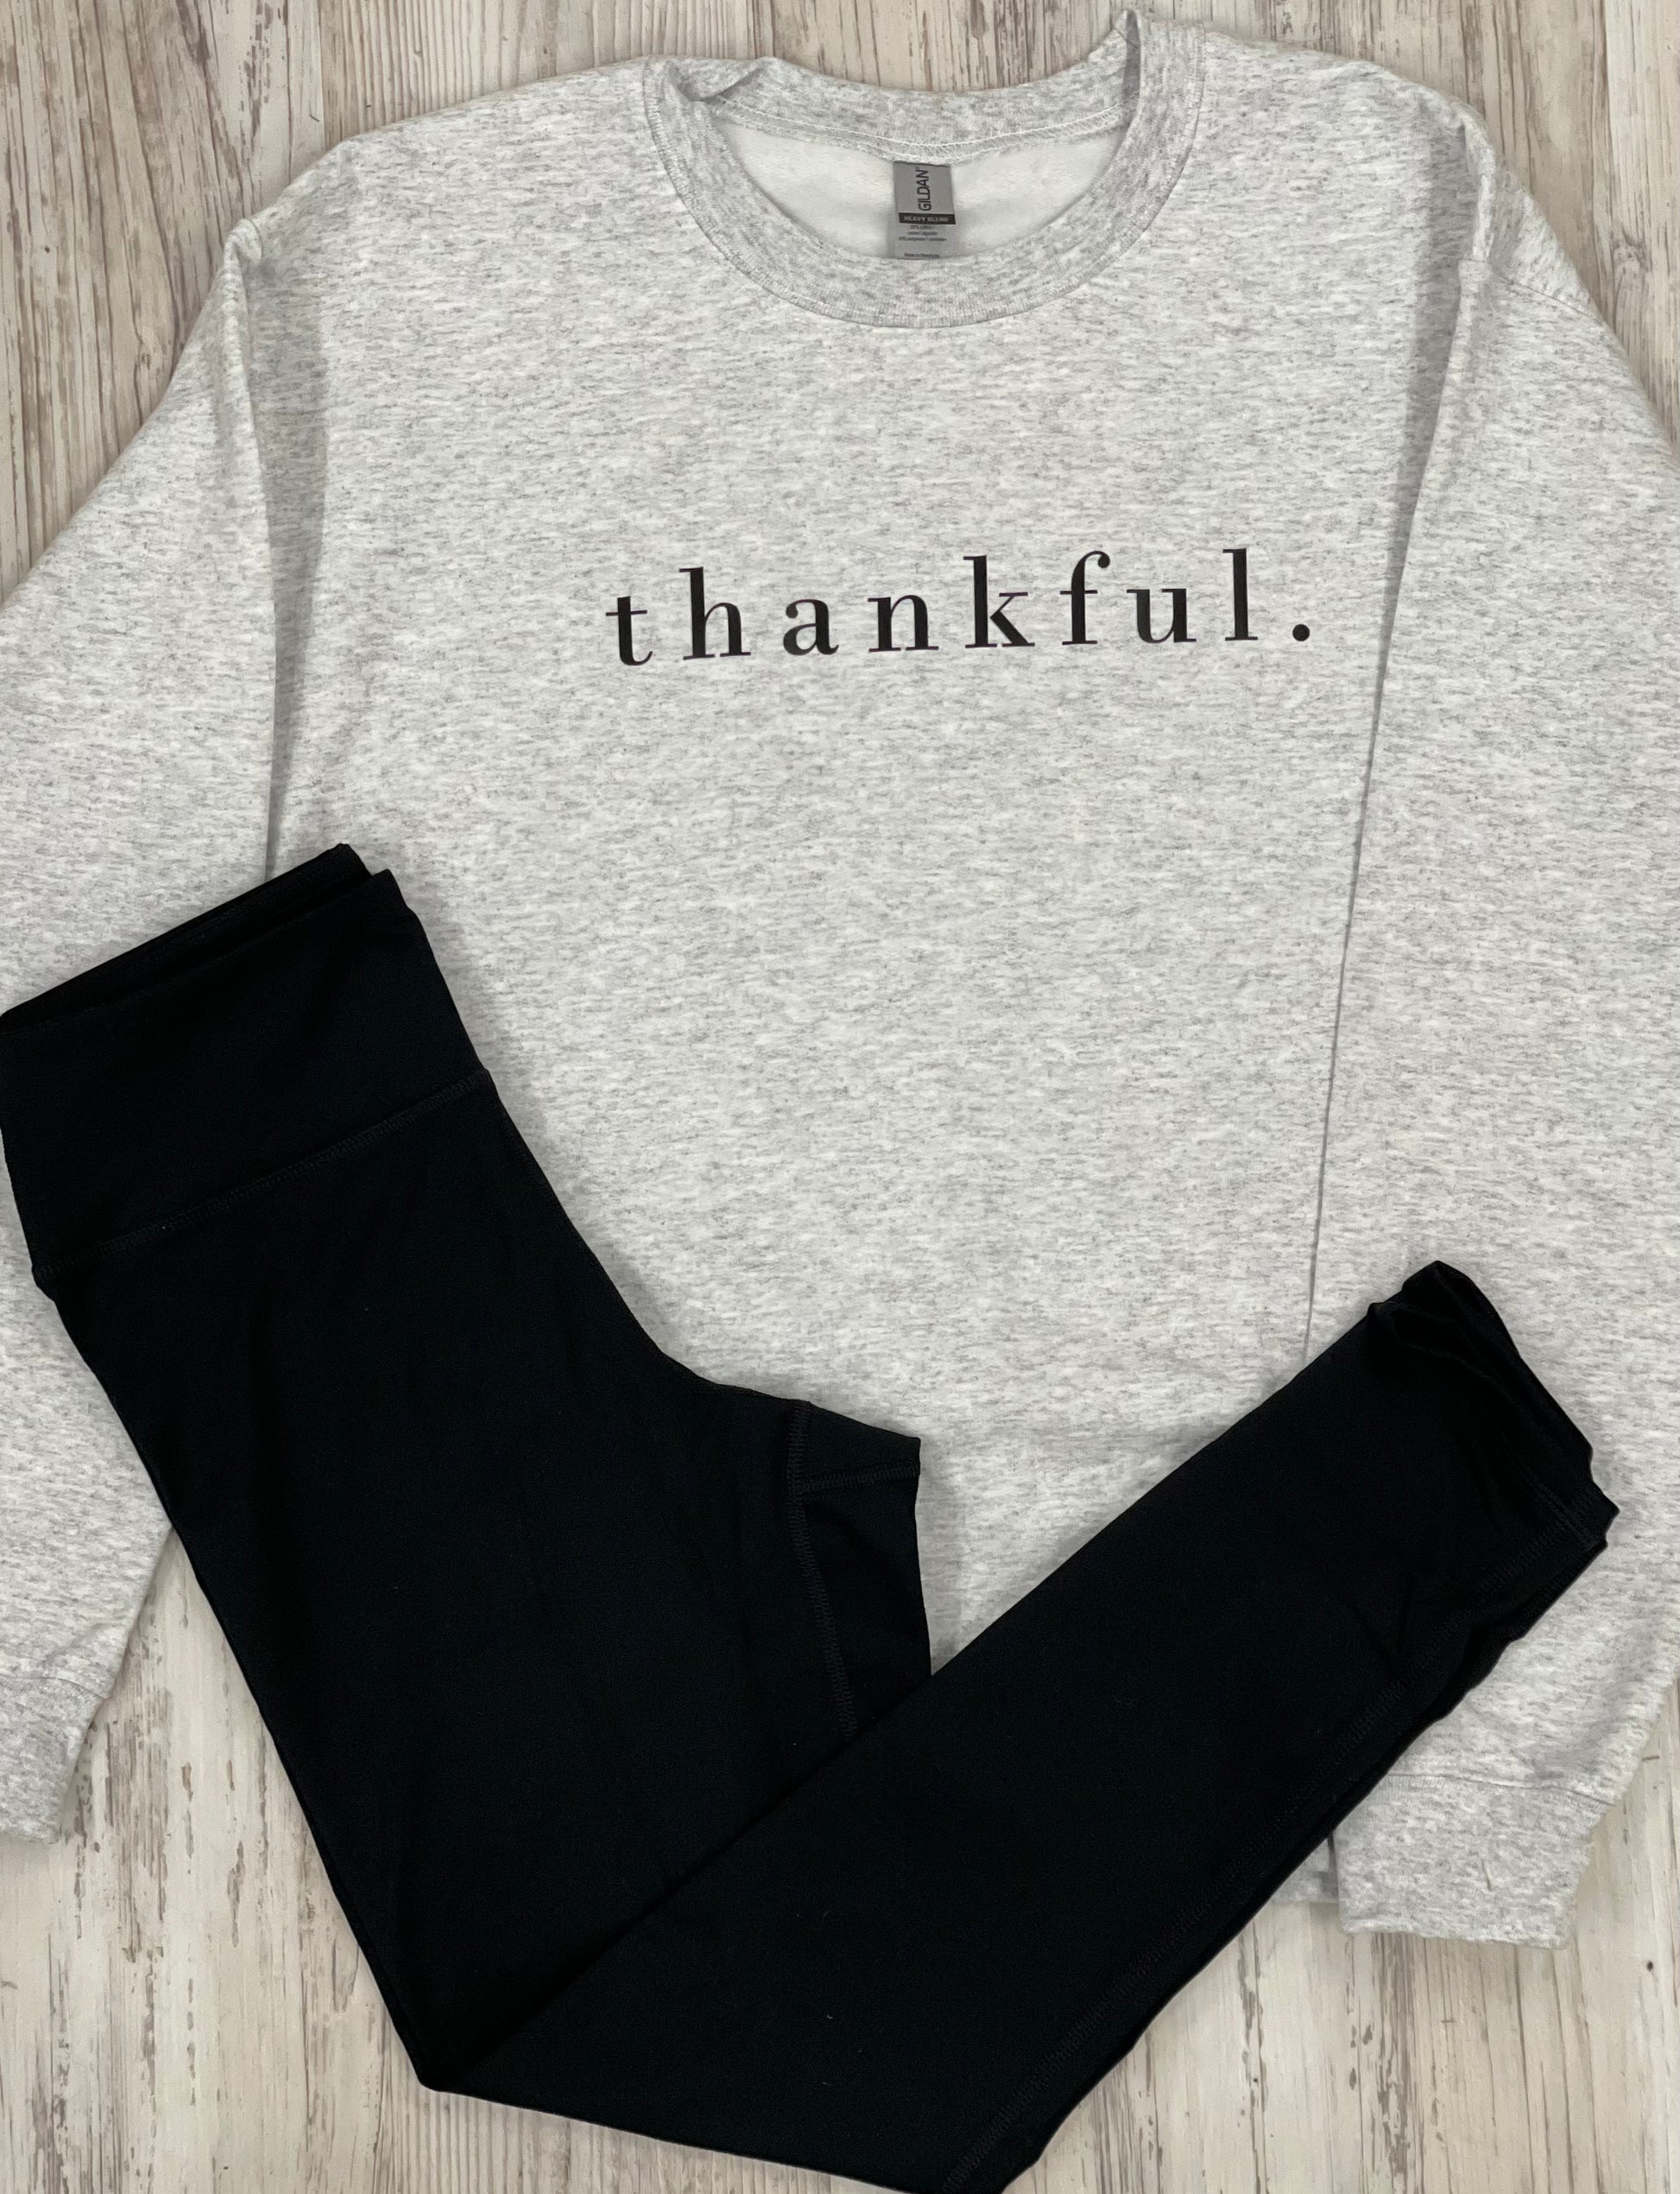 Thankful Sweatshirt - Gray - Southern Grace Creations